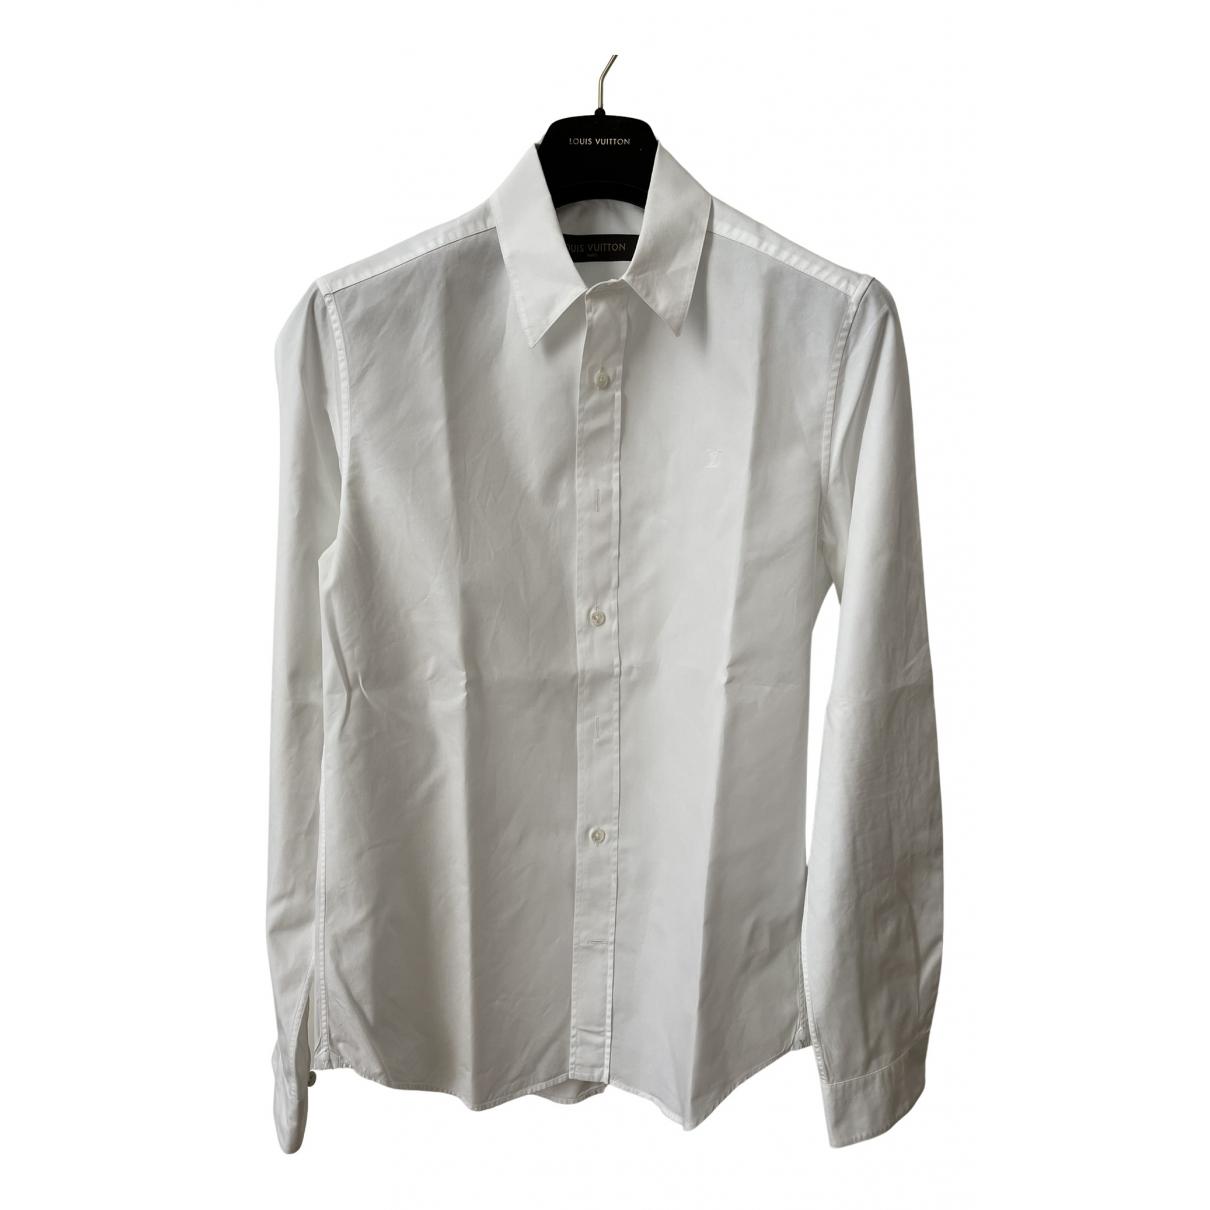 Camisas Louis vuitton Blanco talla S International de en Algodón - 28440868